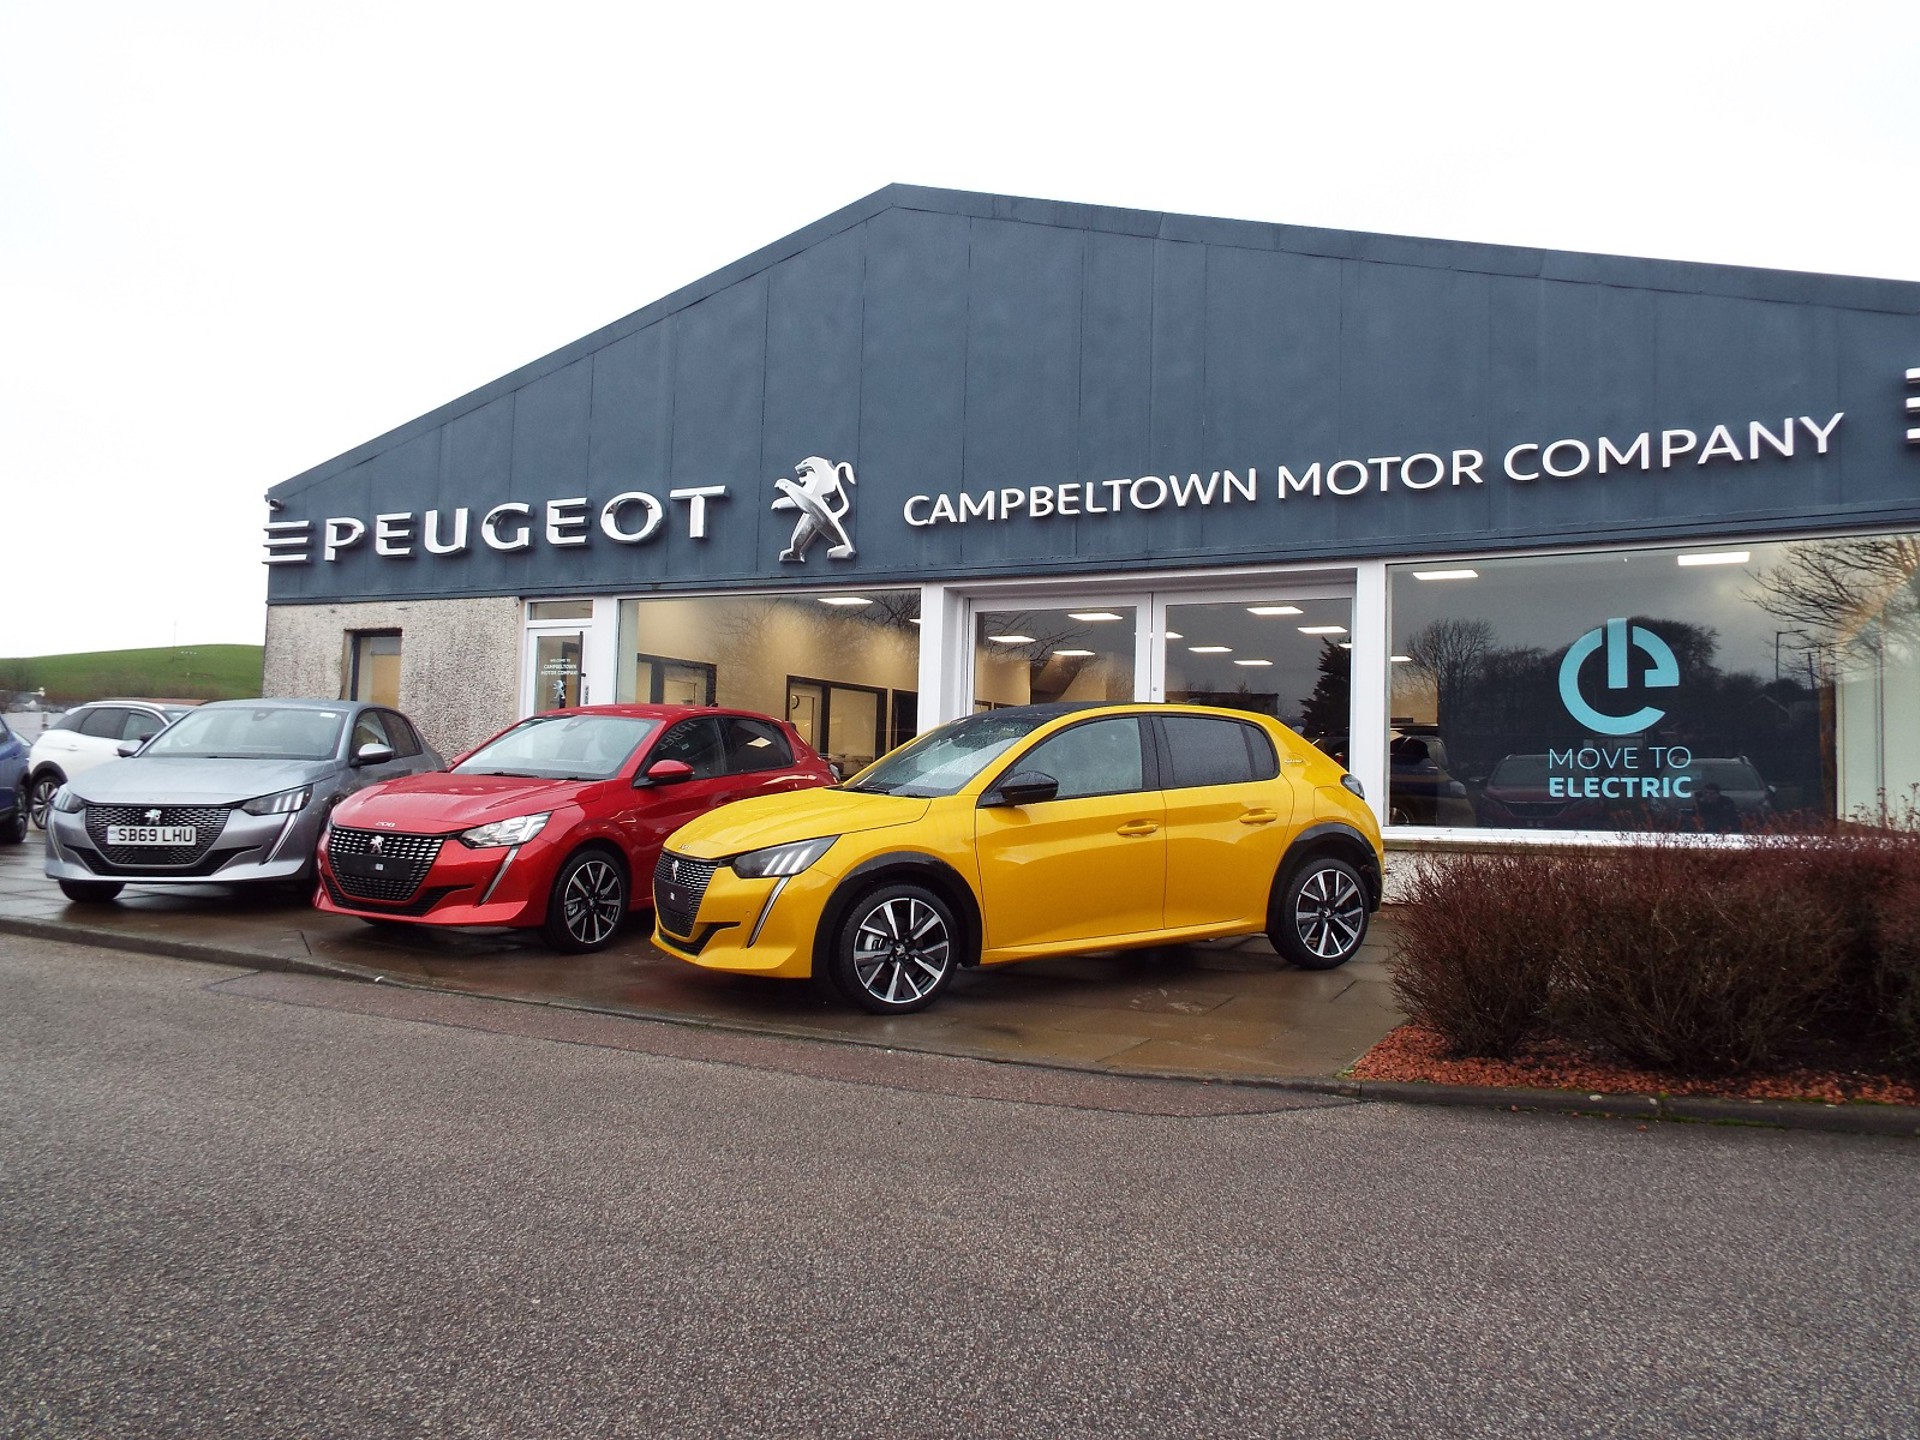 Background image - Campbeltown Motor Company